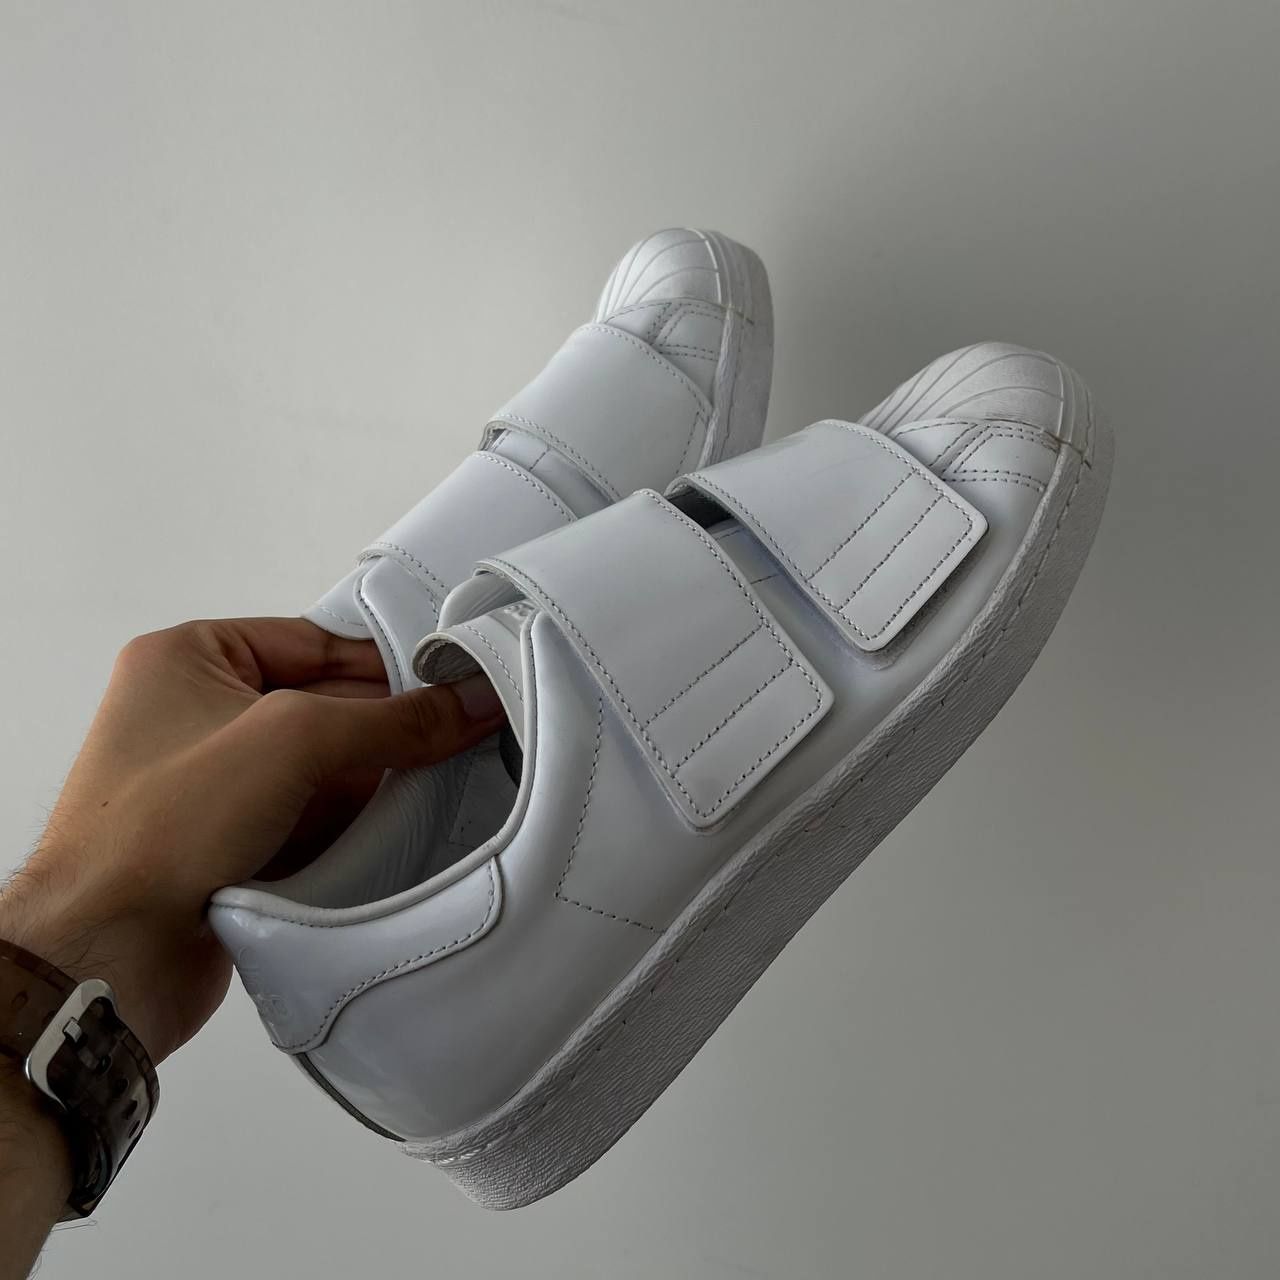 Adidas originals superstar strap patten leather кросівки кеди оригінал